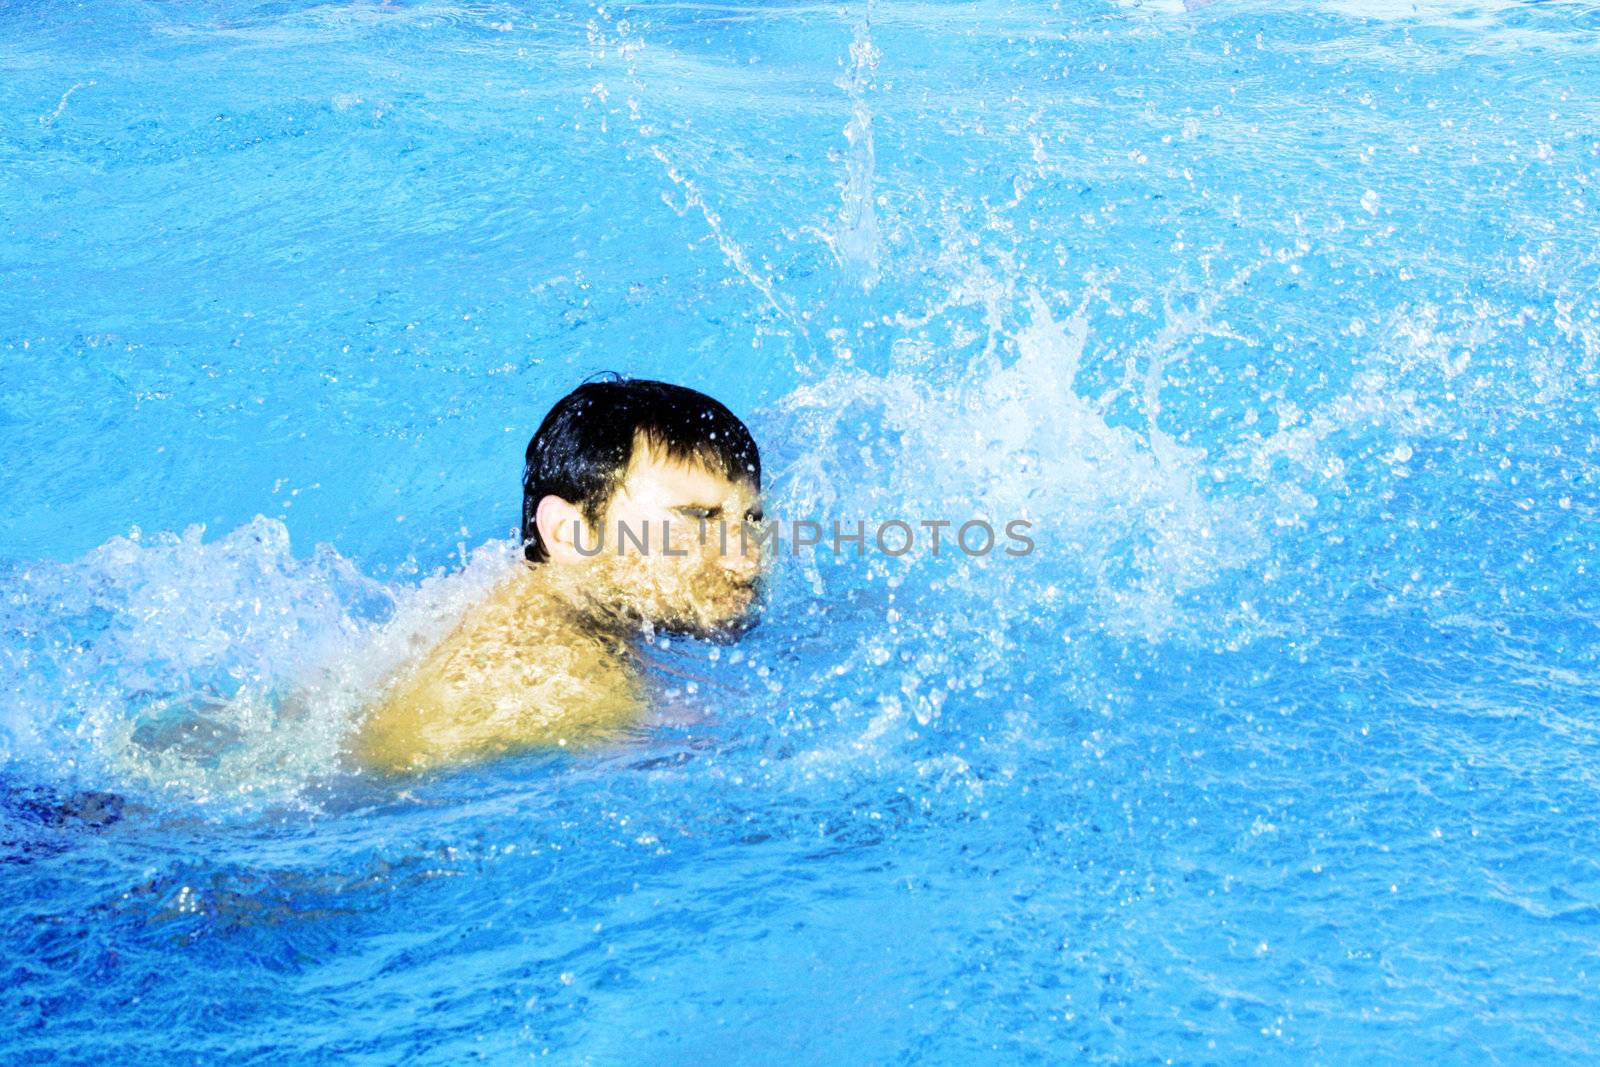 hobby swimmer by photochecker